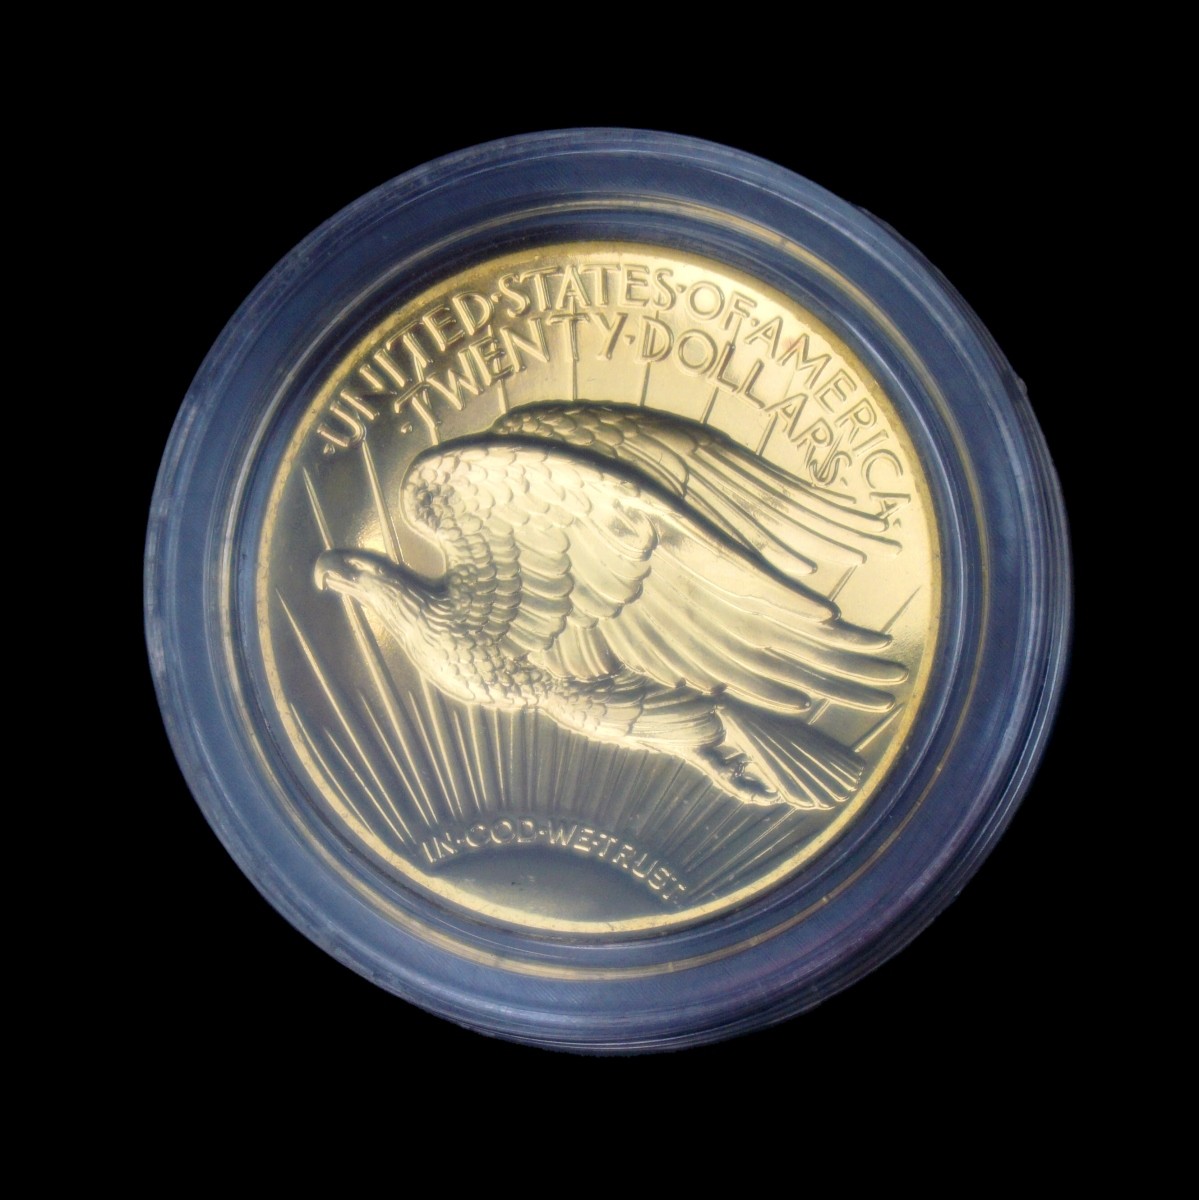 2009 $20 Double Eagle Gold Coin